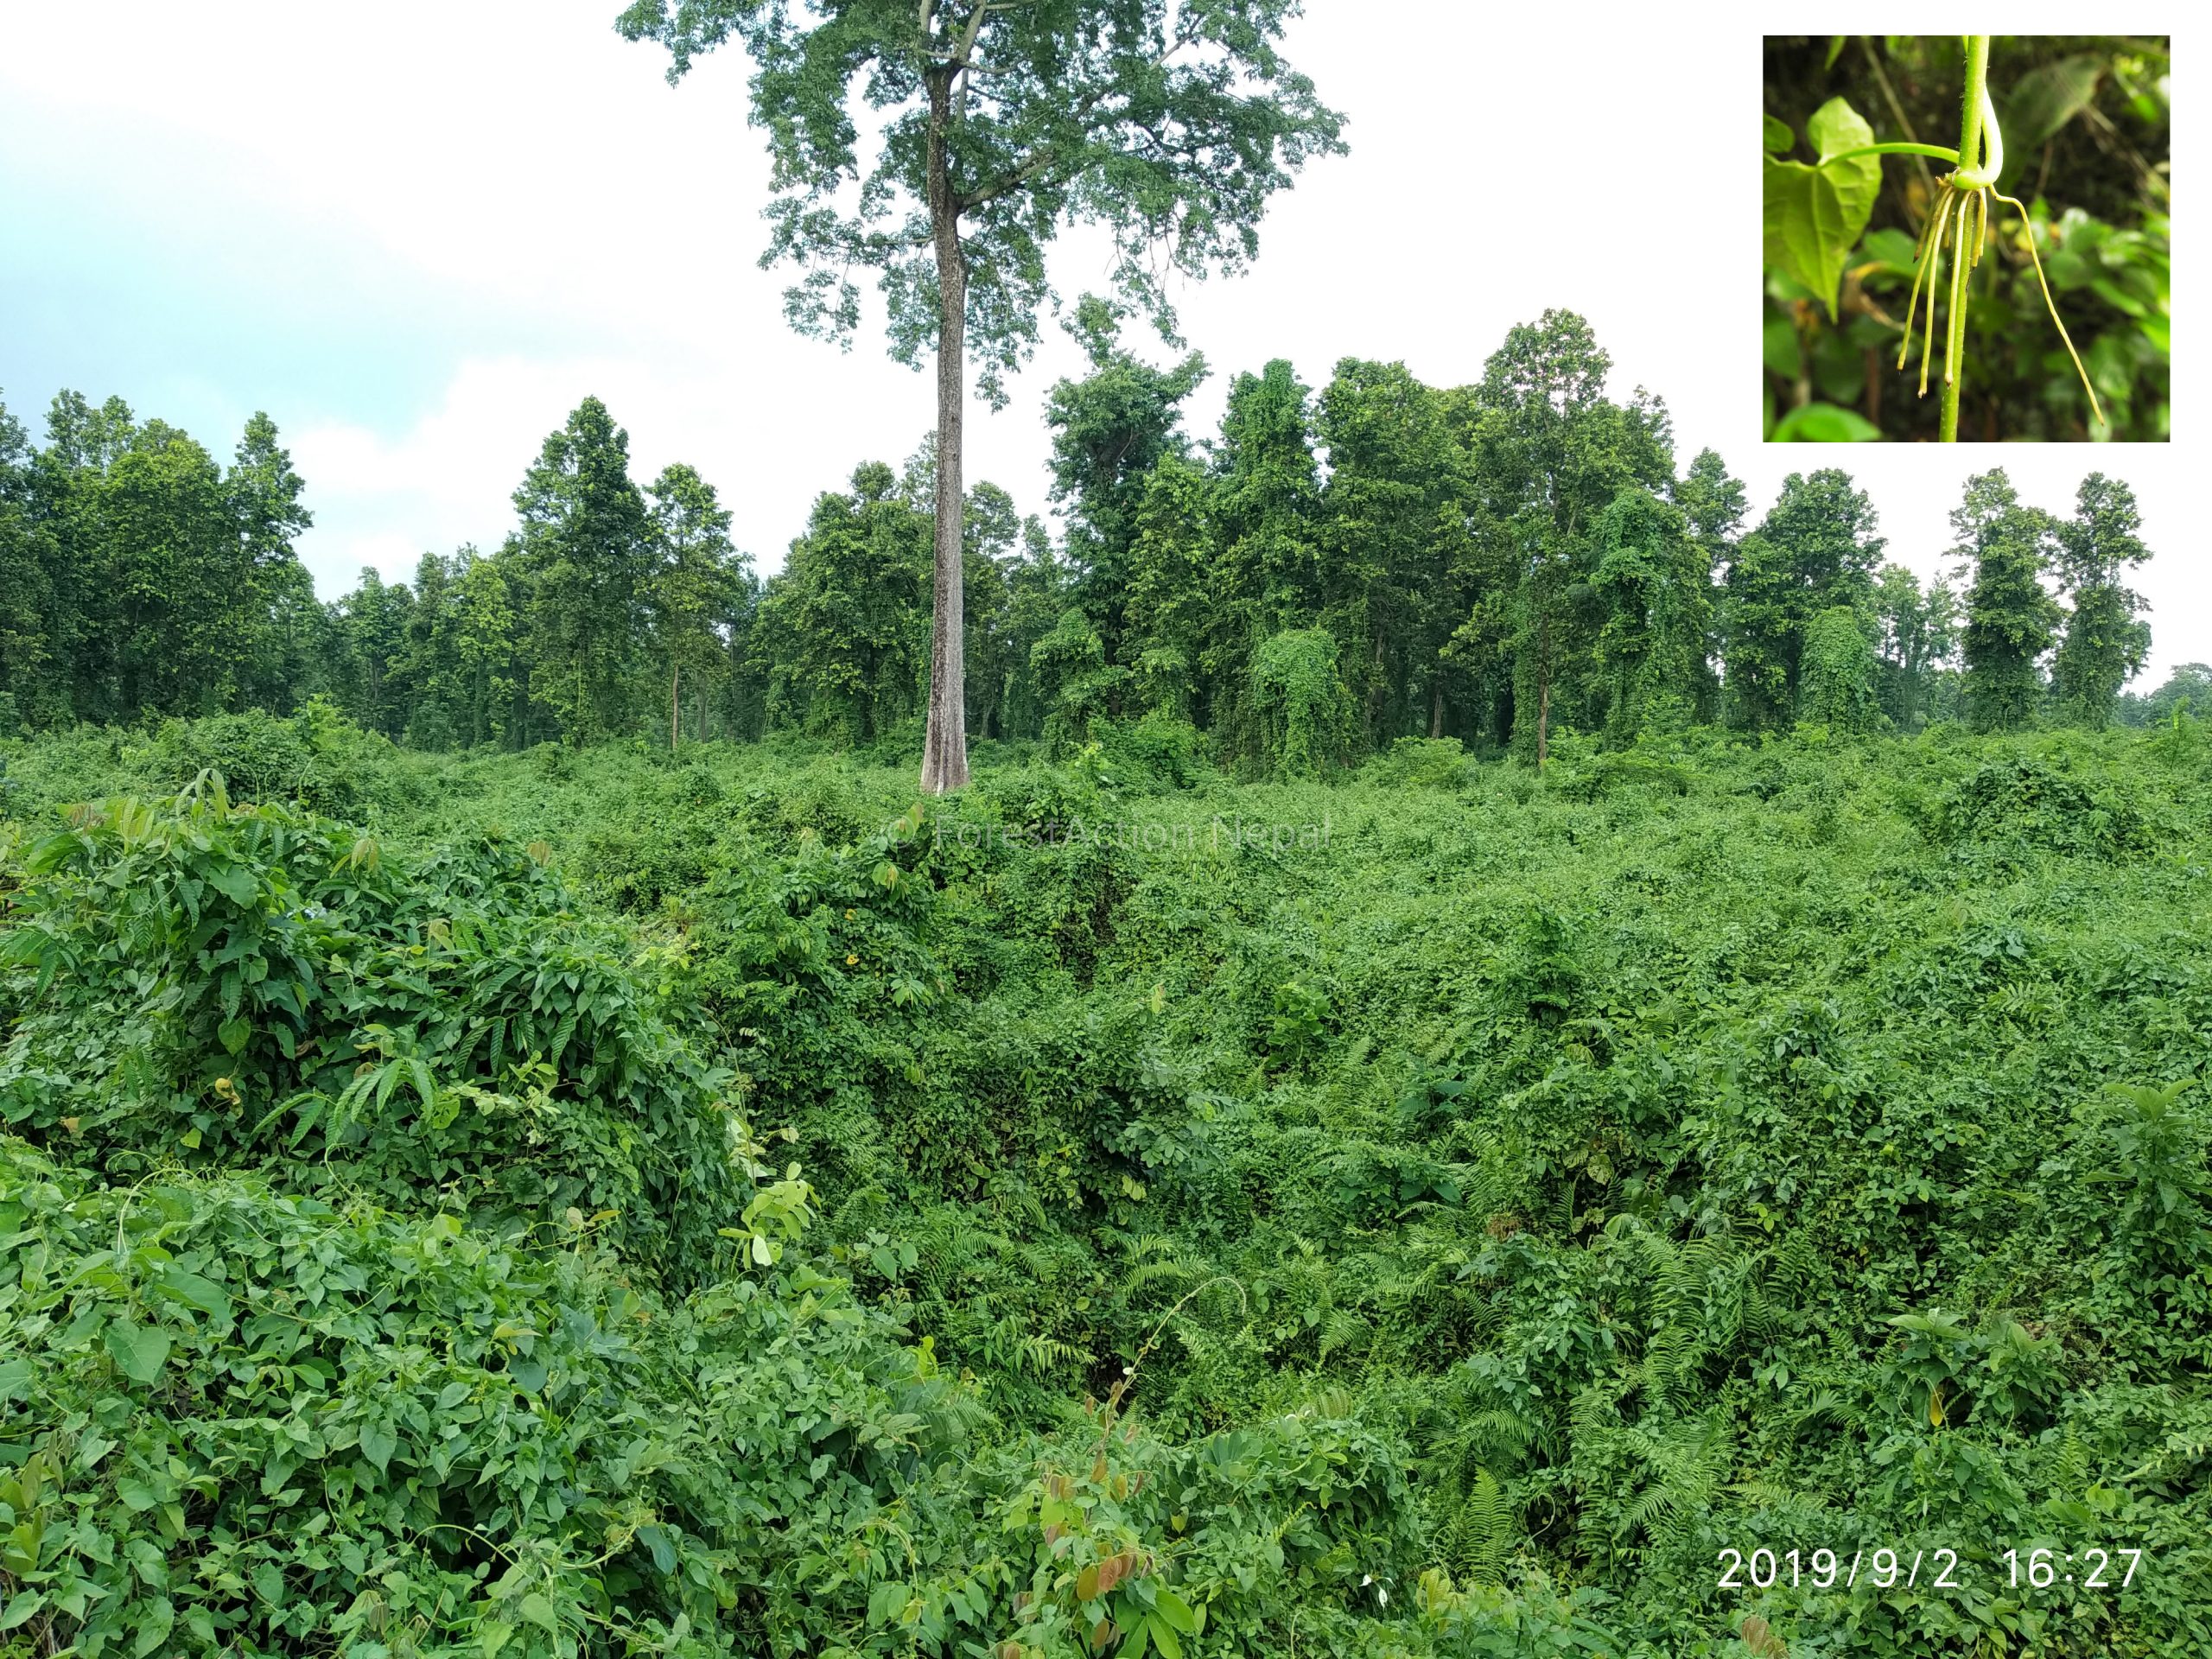 Combating invasion, restoring forest through turmeric plantation?